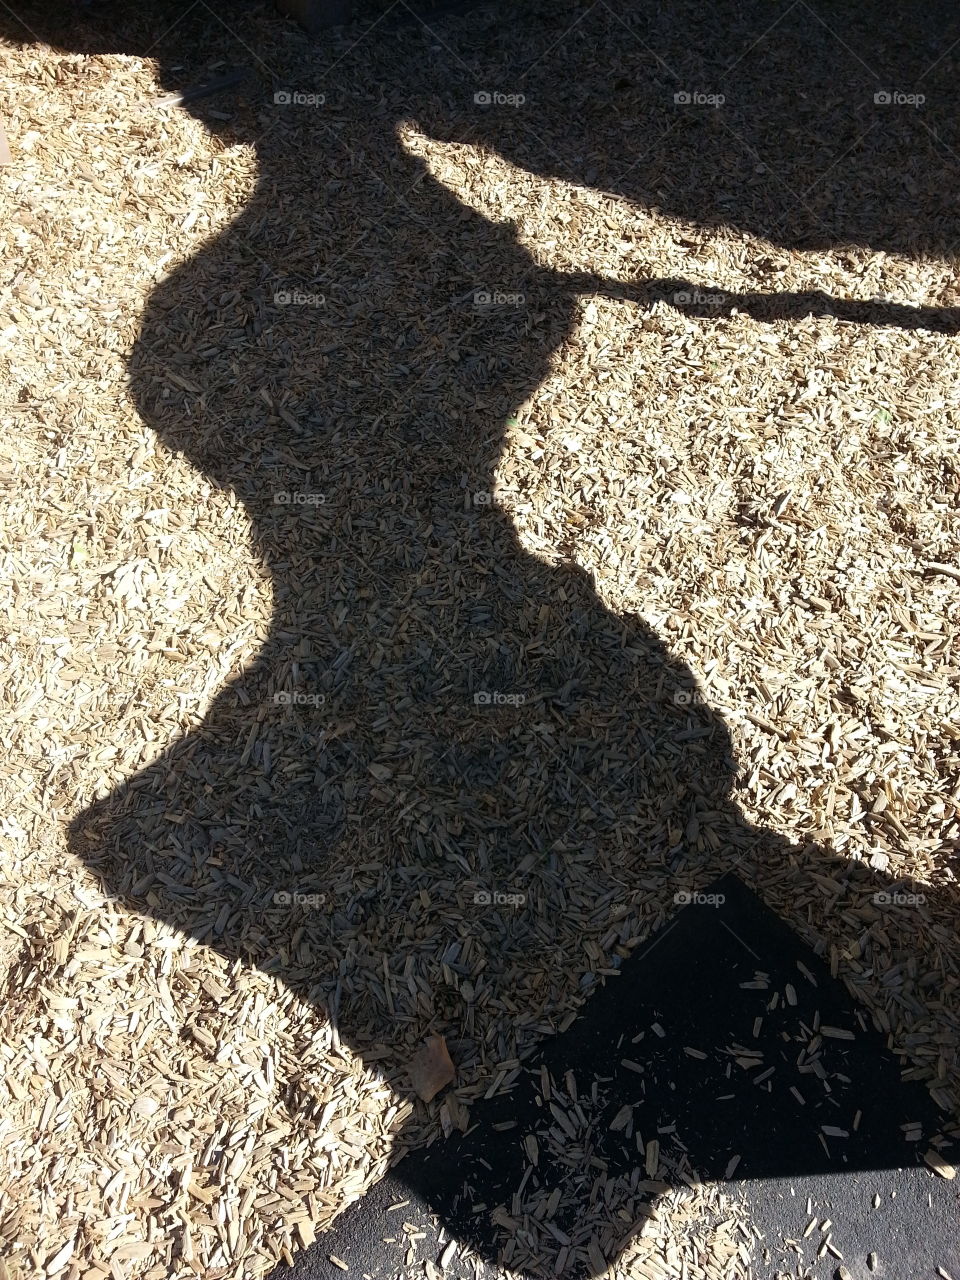 Slide shadow. Shadow of a bumpy slide